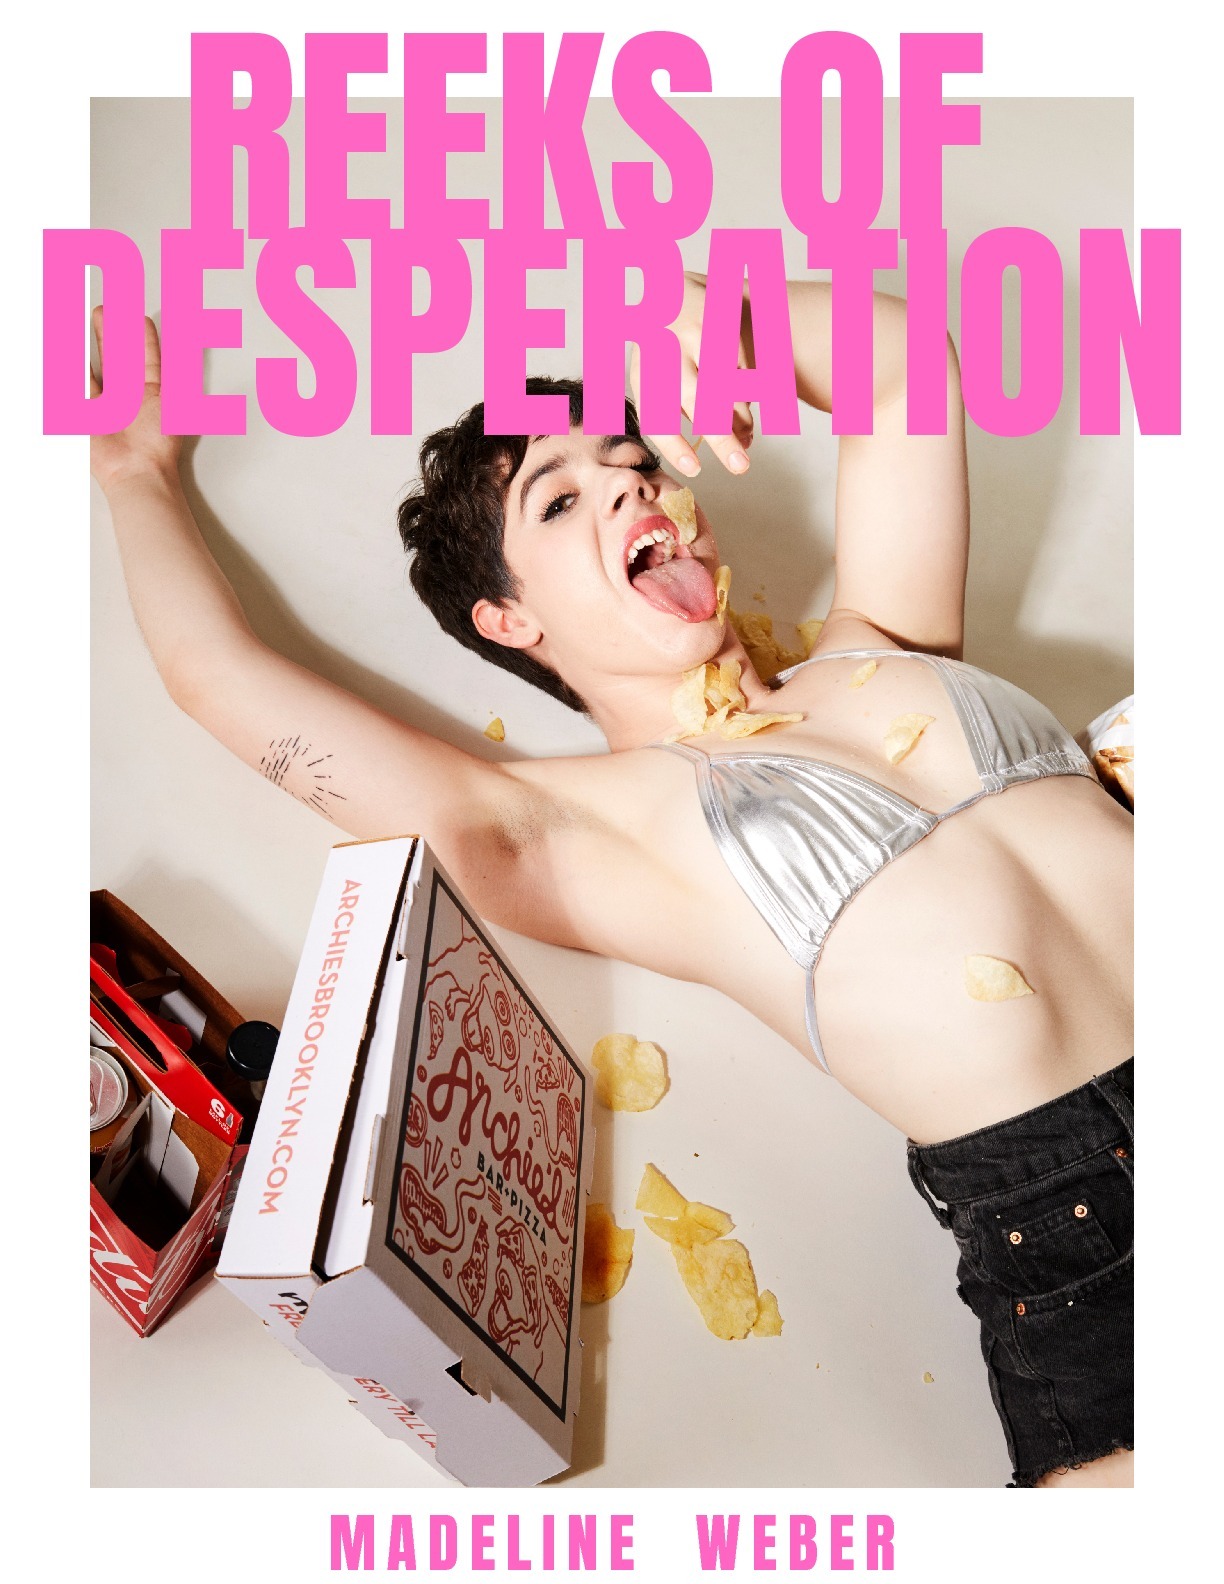 The poster for Reeks Of Desperation